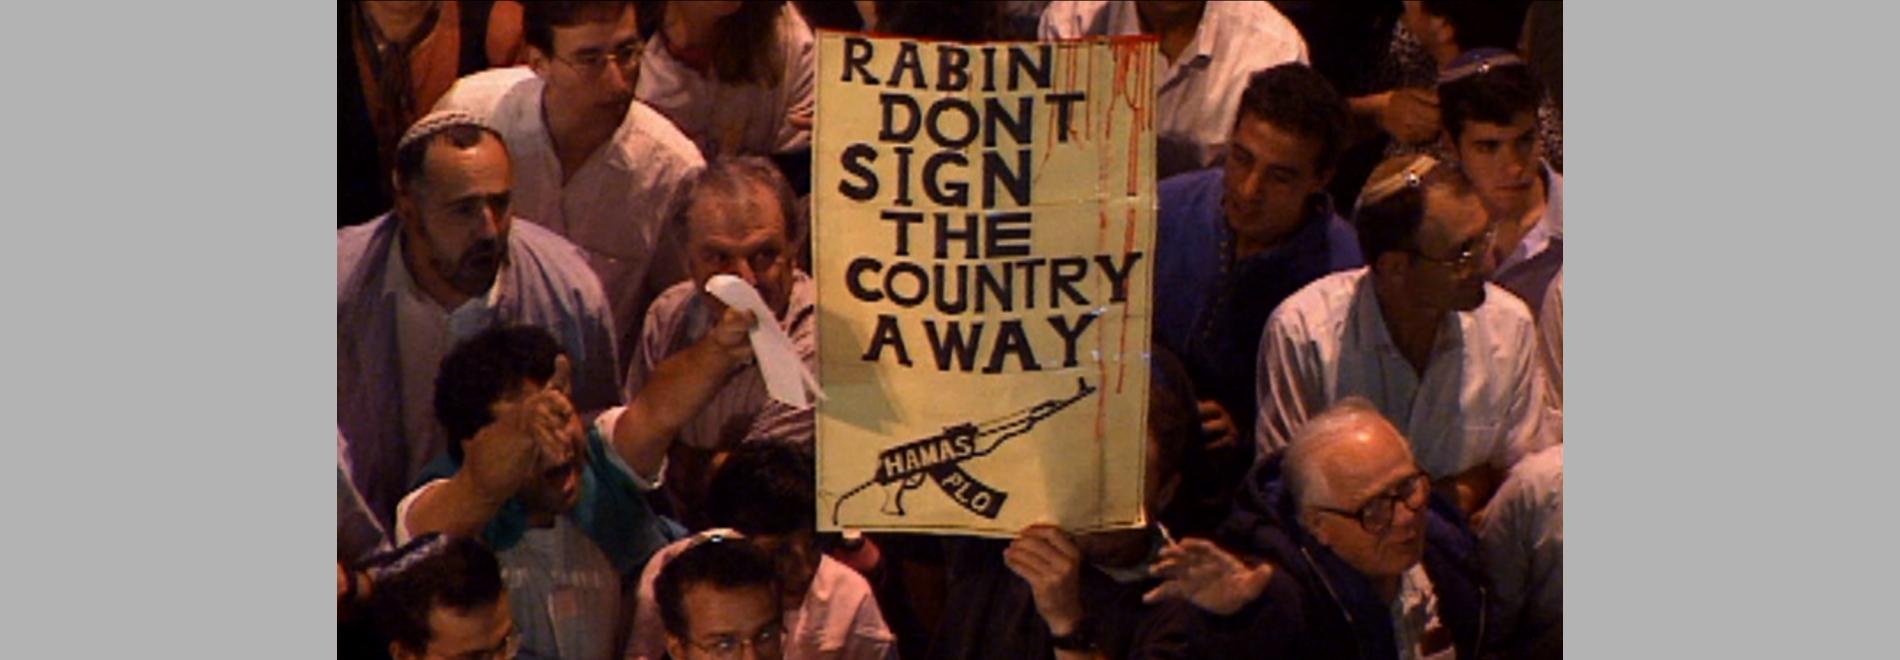 Rabin, the Last Day (amos Gitai, 2015)